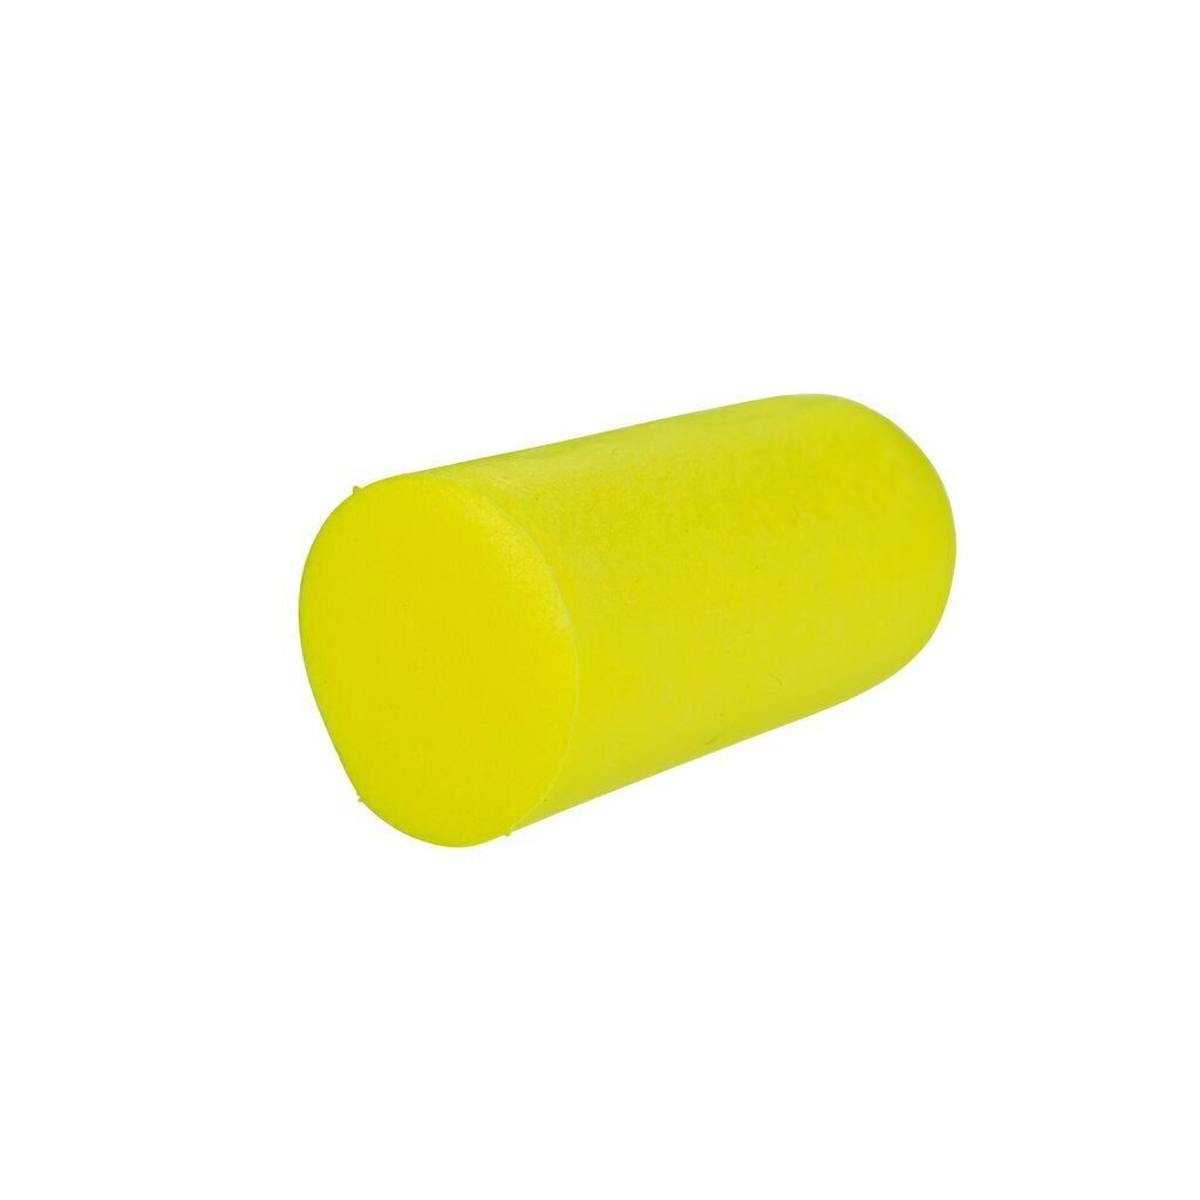 3M E-A-R Soft Yellow Neons, Polyurethan, flexibel und komfortabel, paarweise in Polybeutel, neongelb, SNR = 36 dB, ES01001